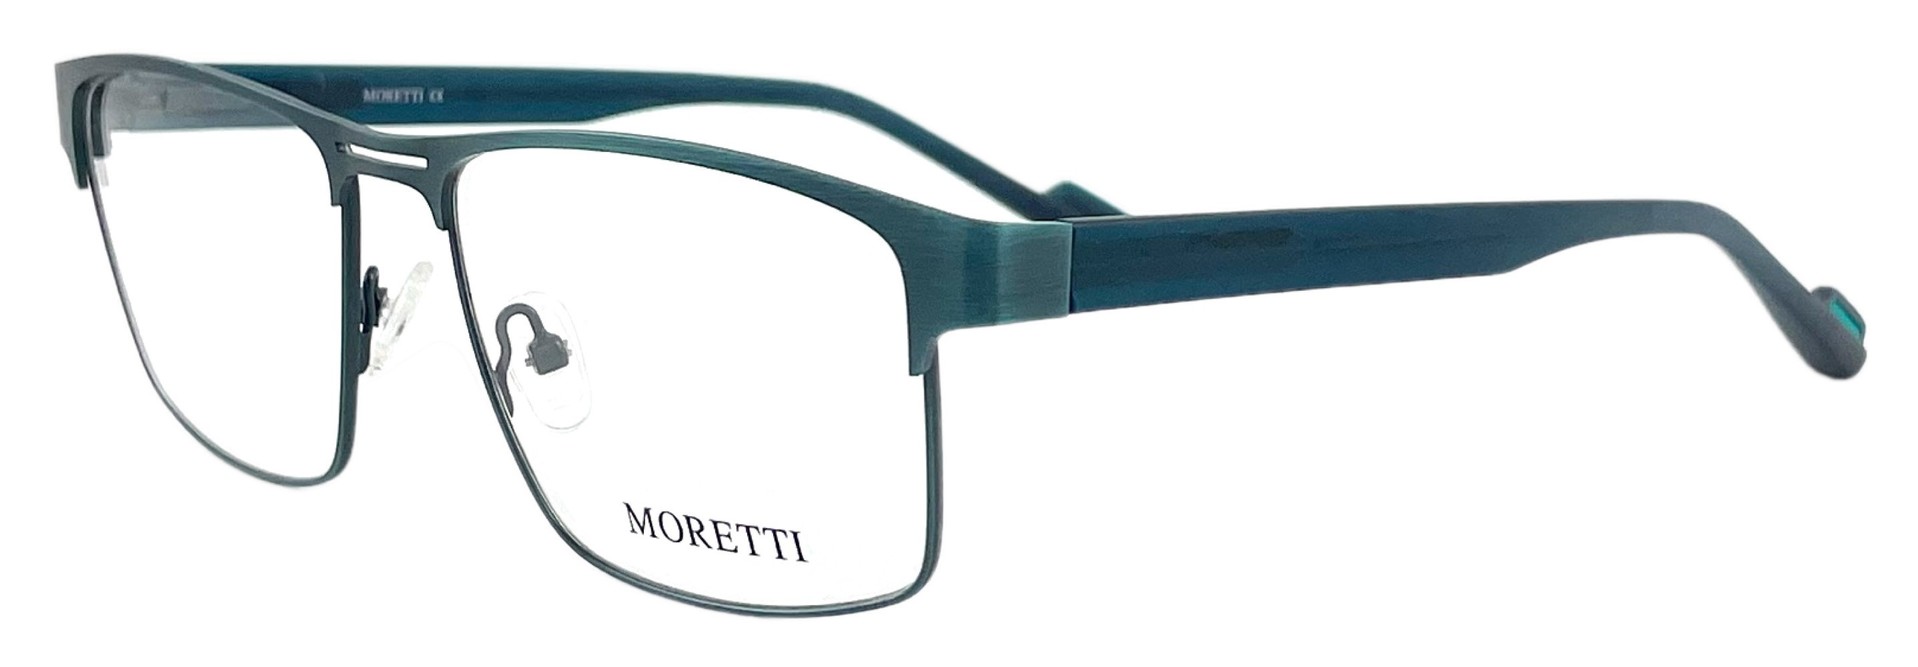 Moretti XTK61002 C4 2